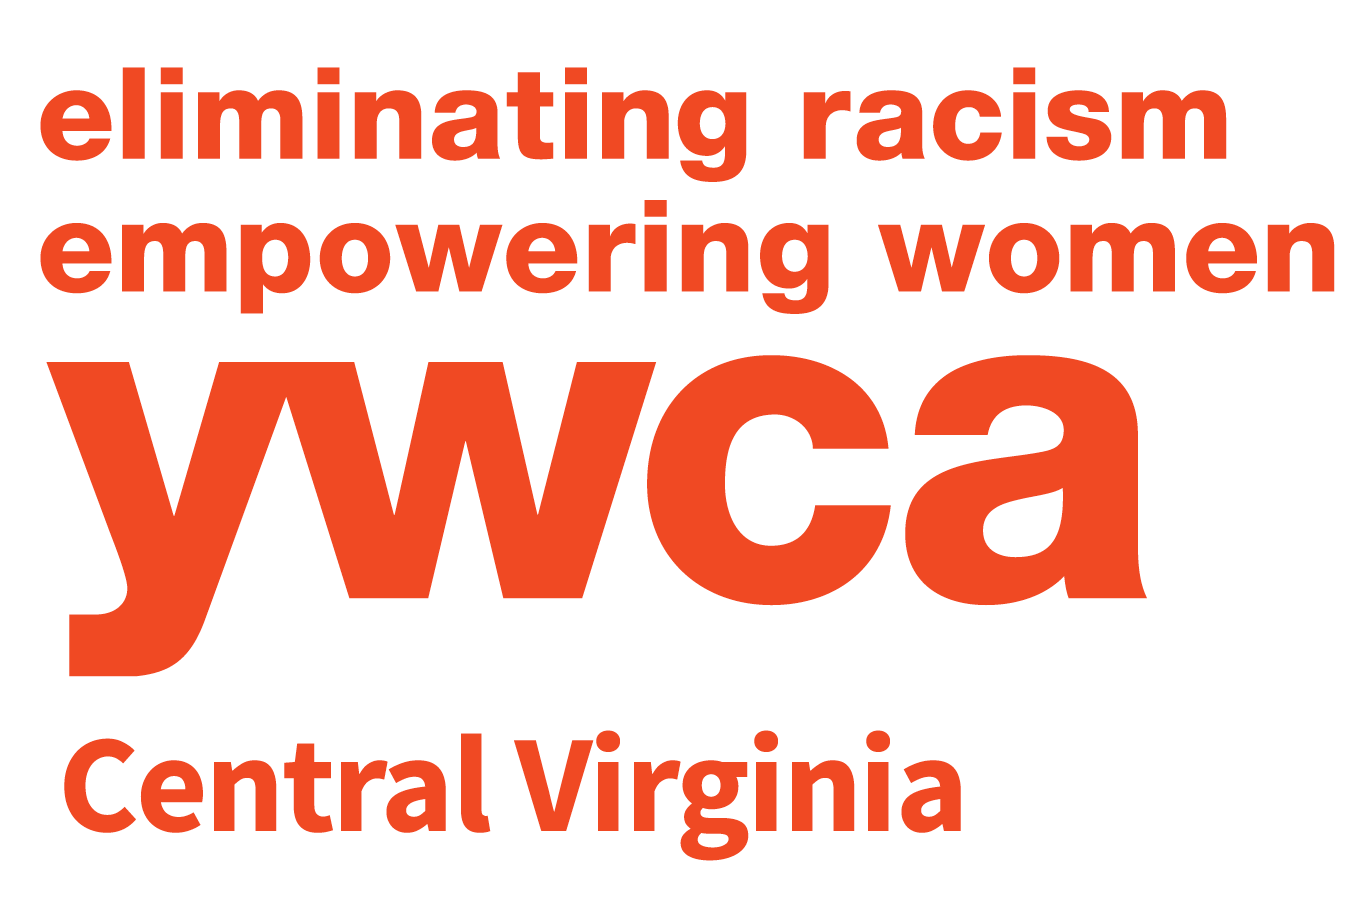 YWCA Central Virginia logo